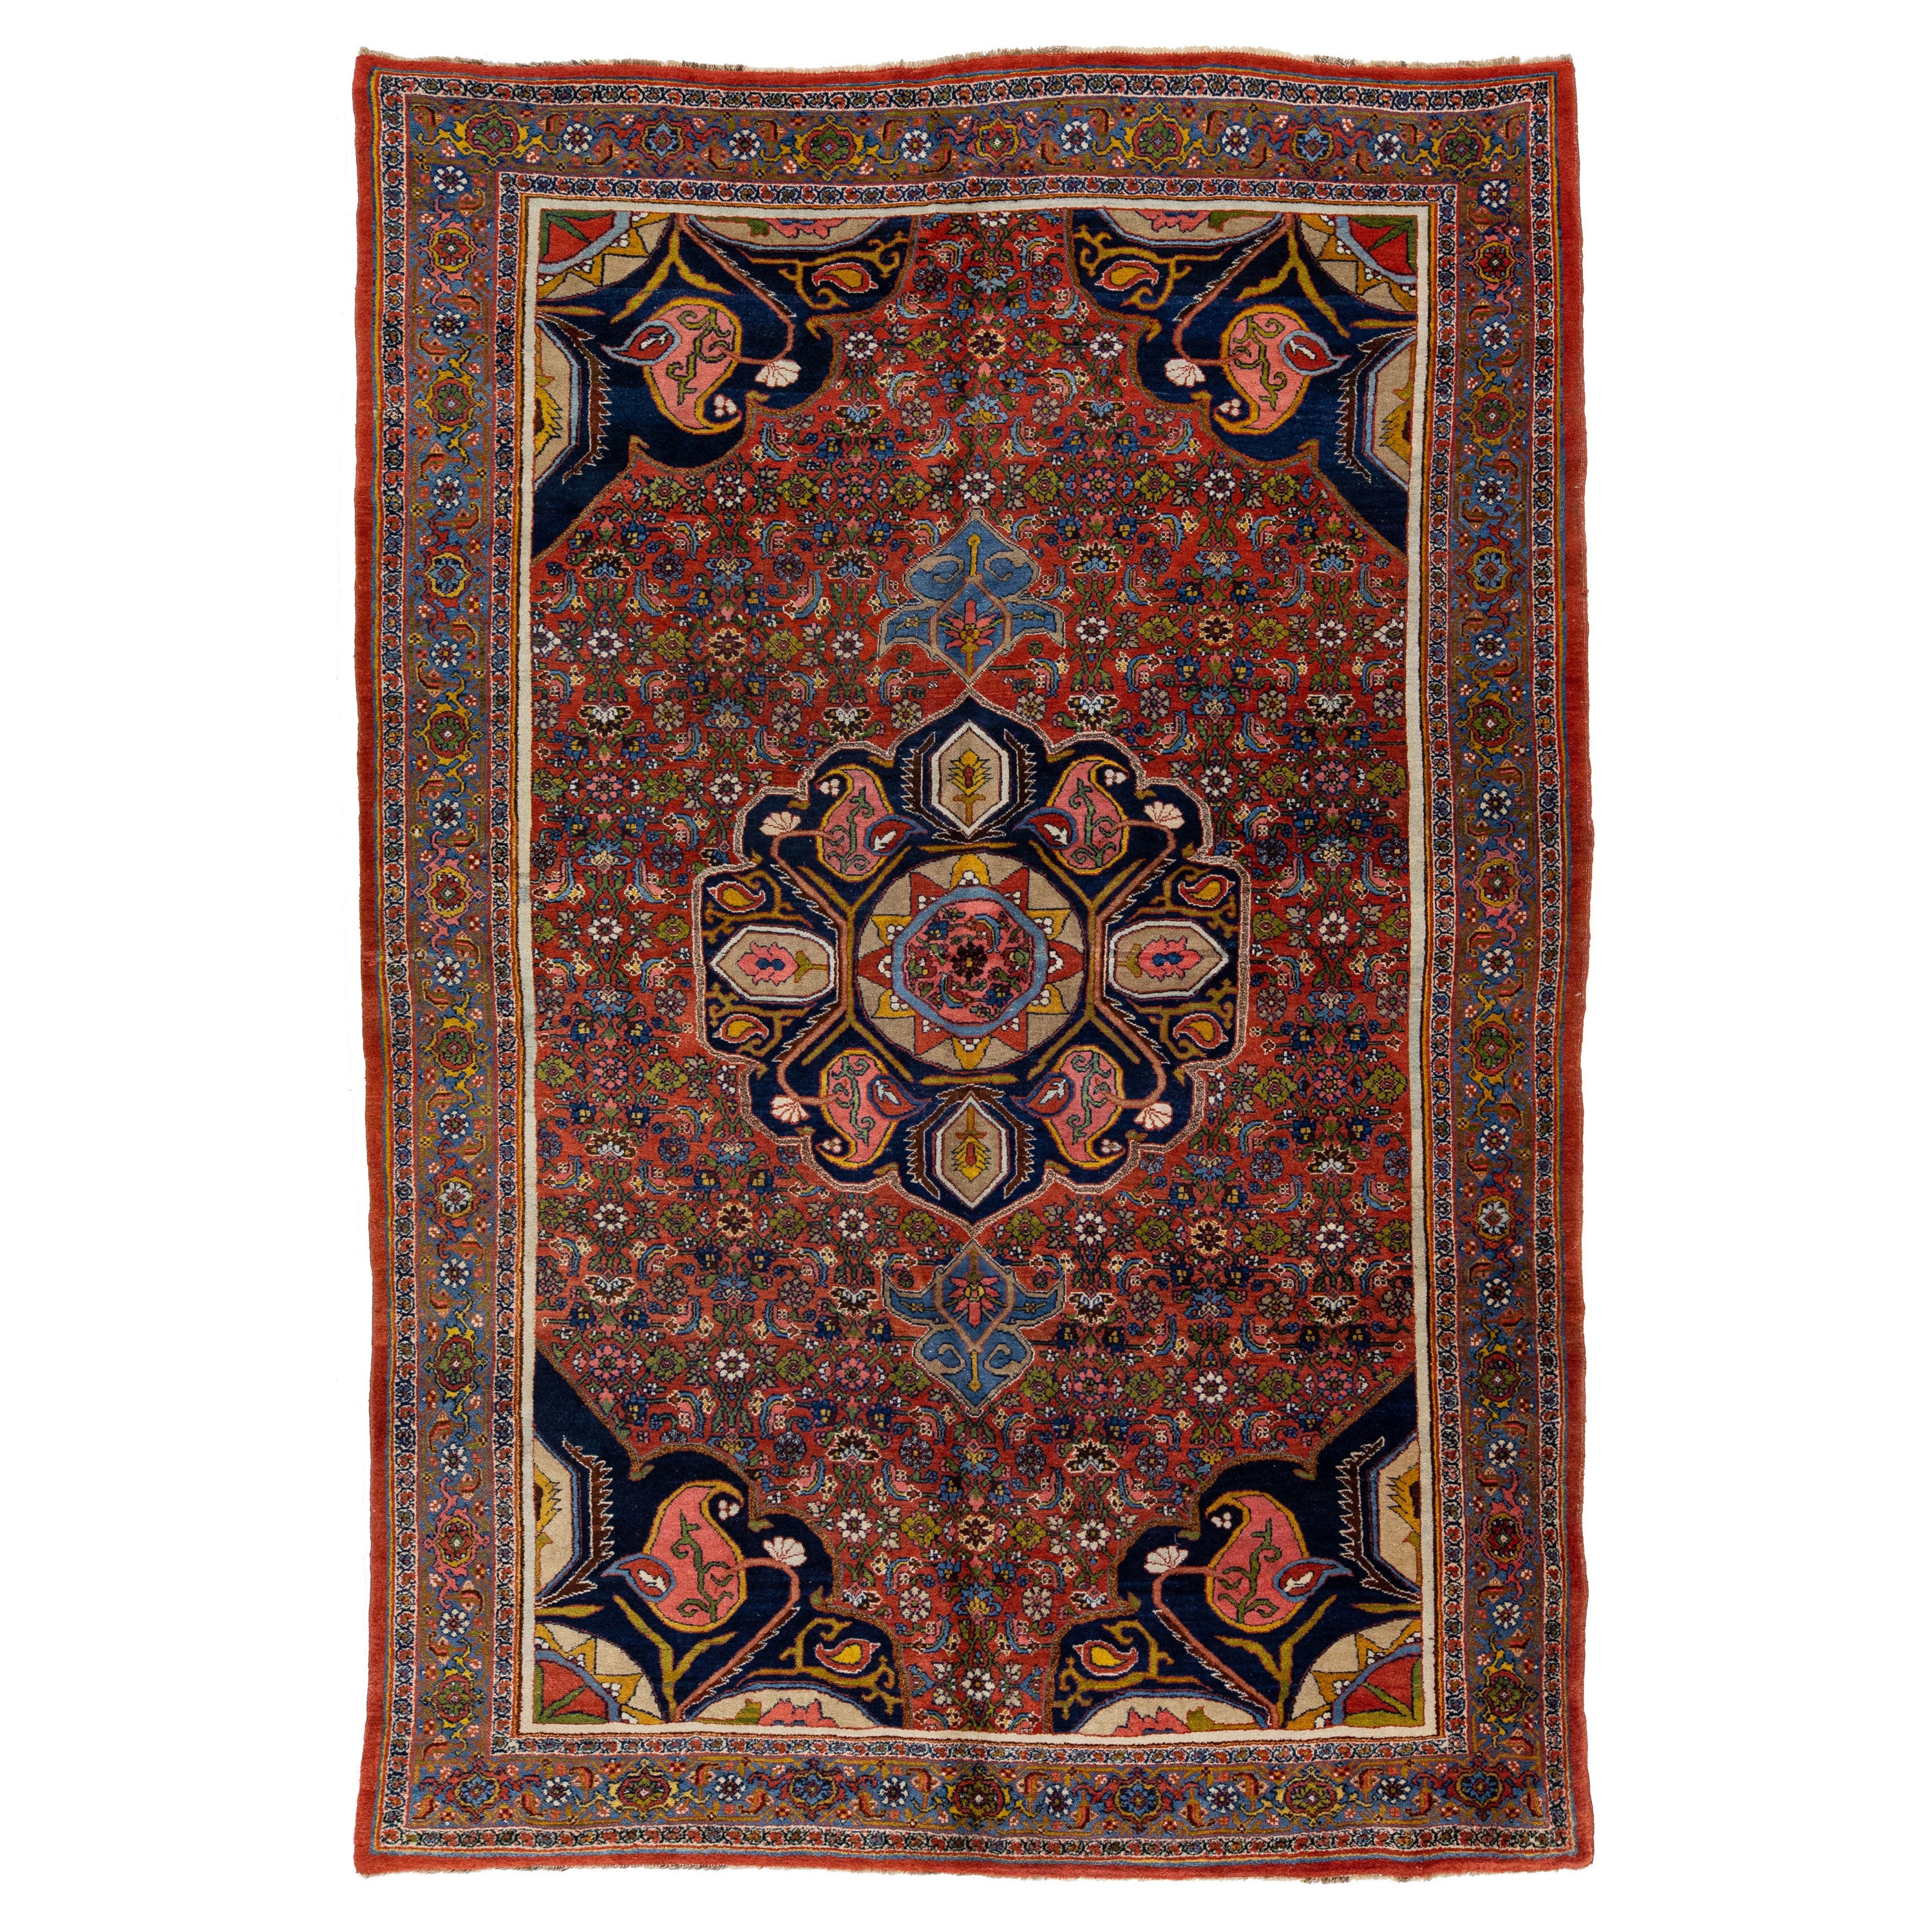 Antique Bidjar Red Handmade Persian Wool Rug with Medallion Floral Motif